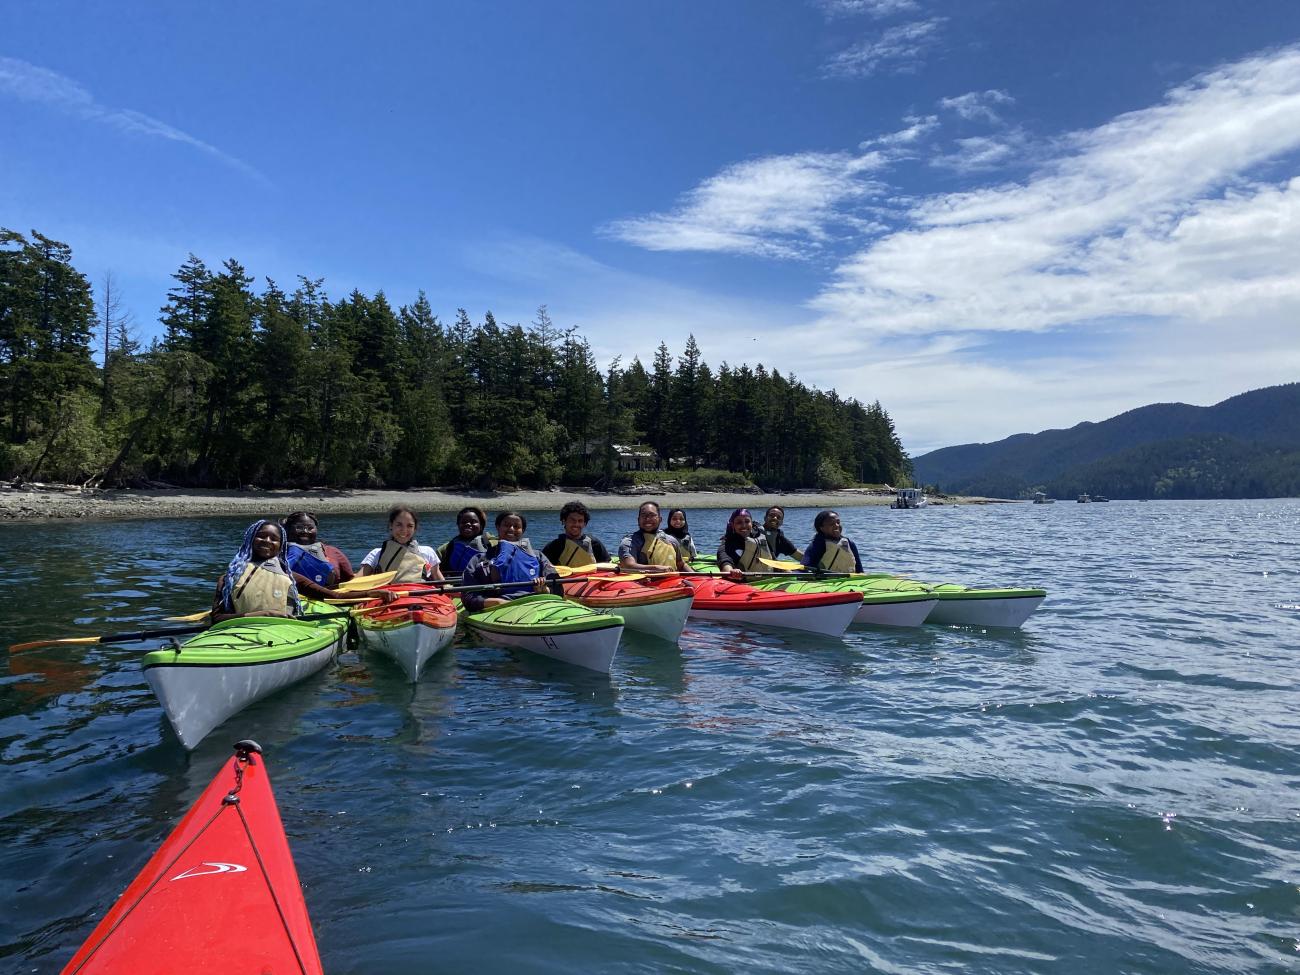 A group of Black Students kayaking together